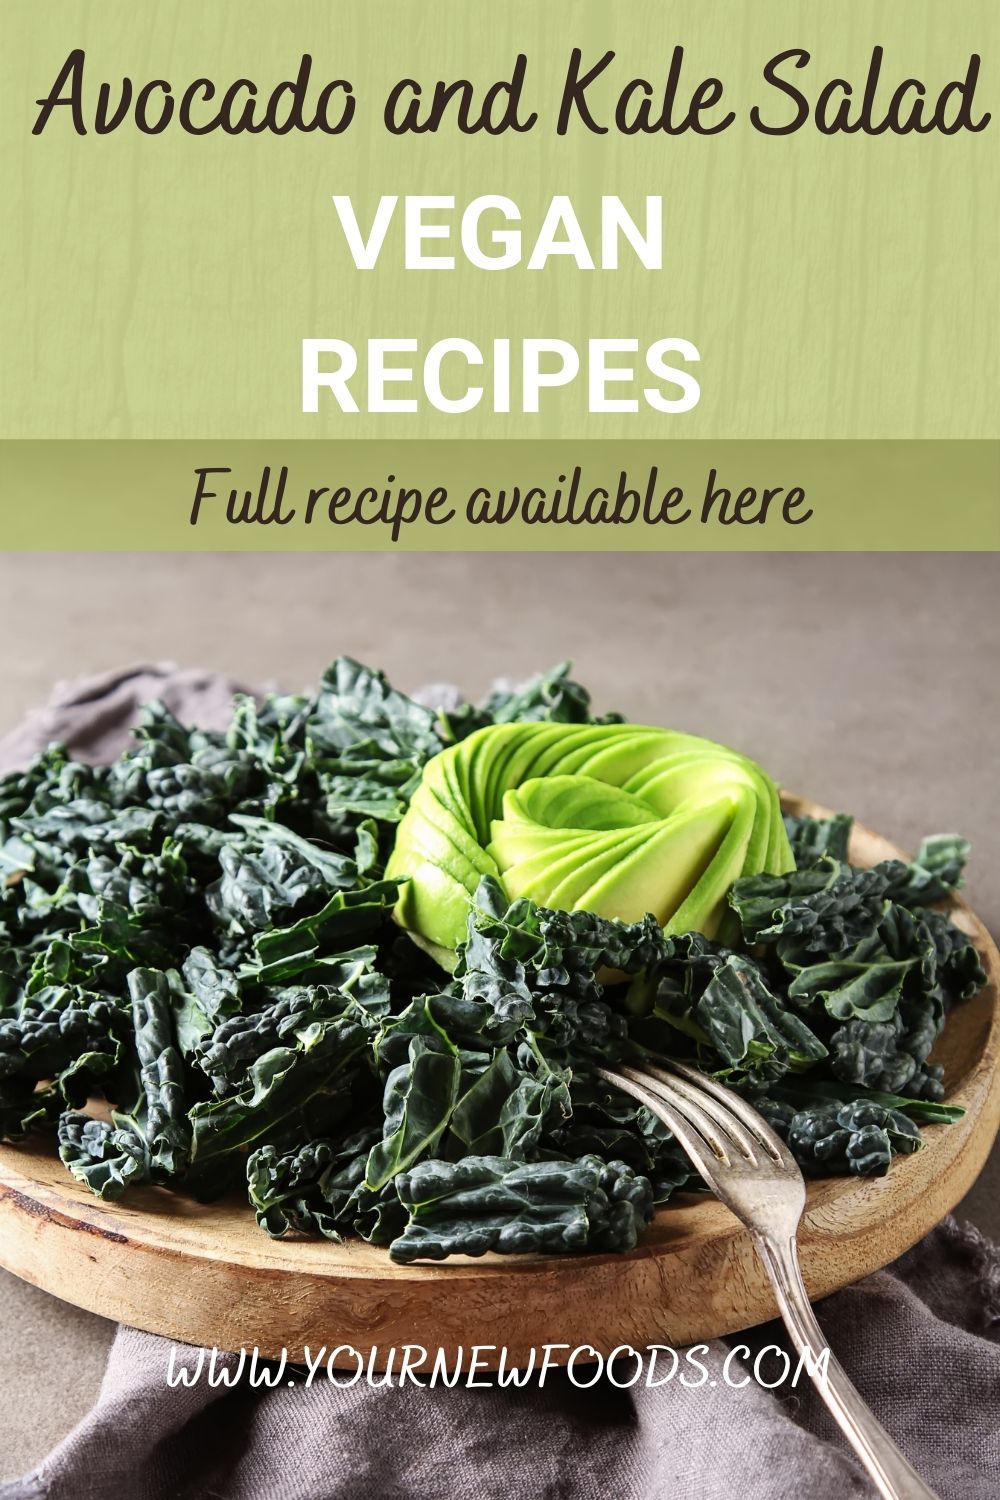 Kale and avocado salad recipe